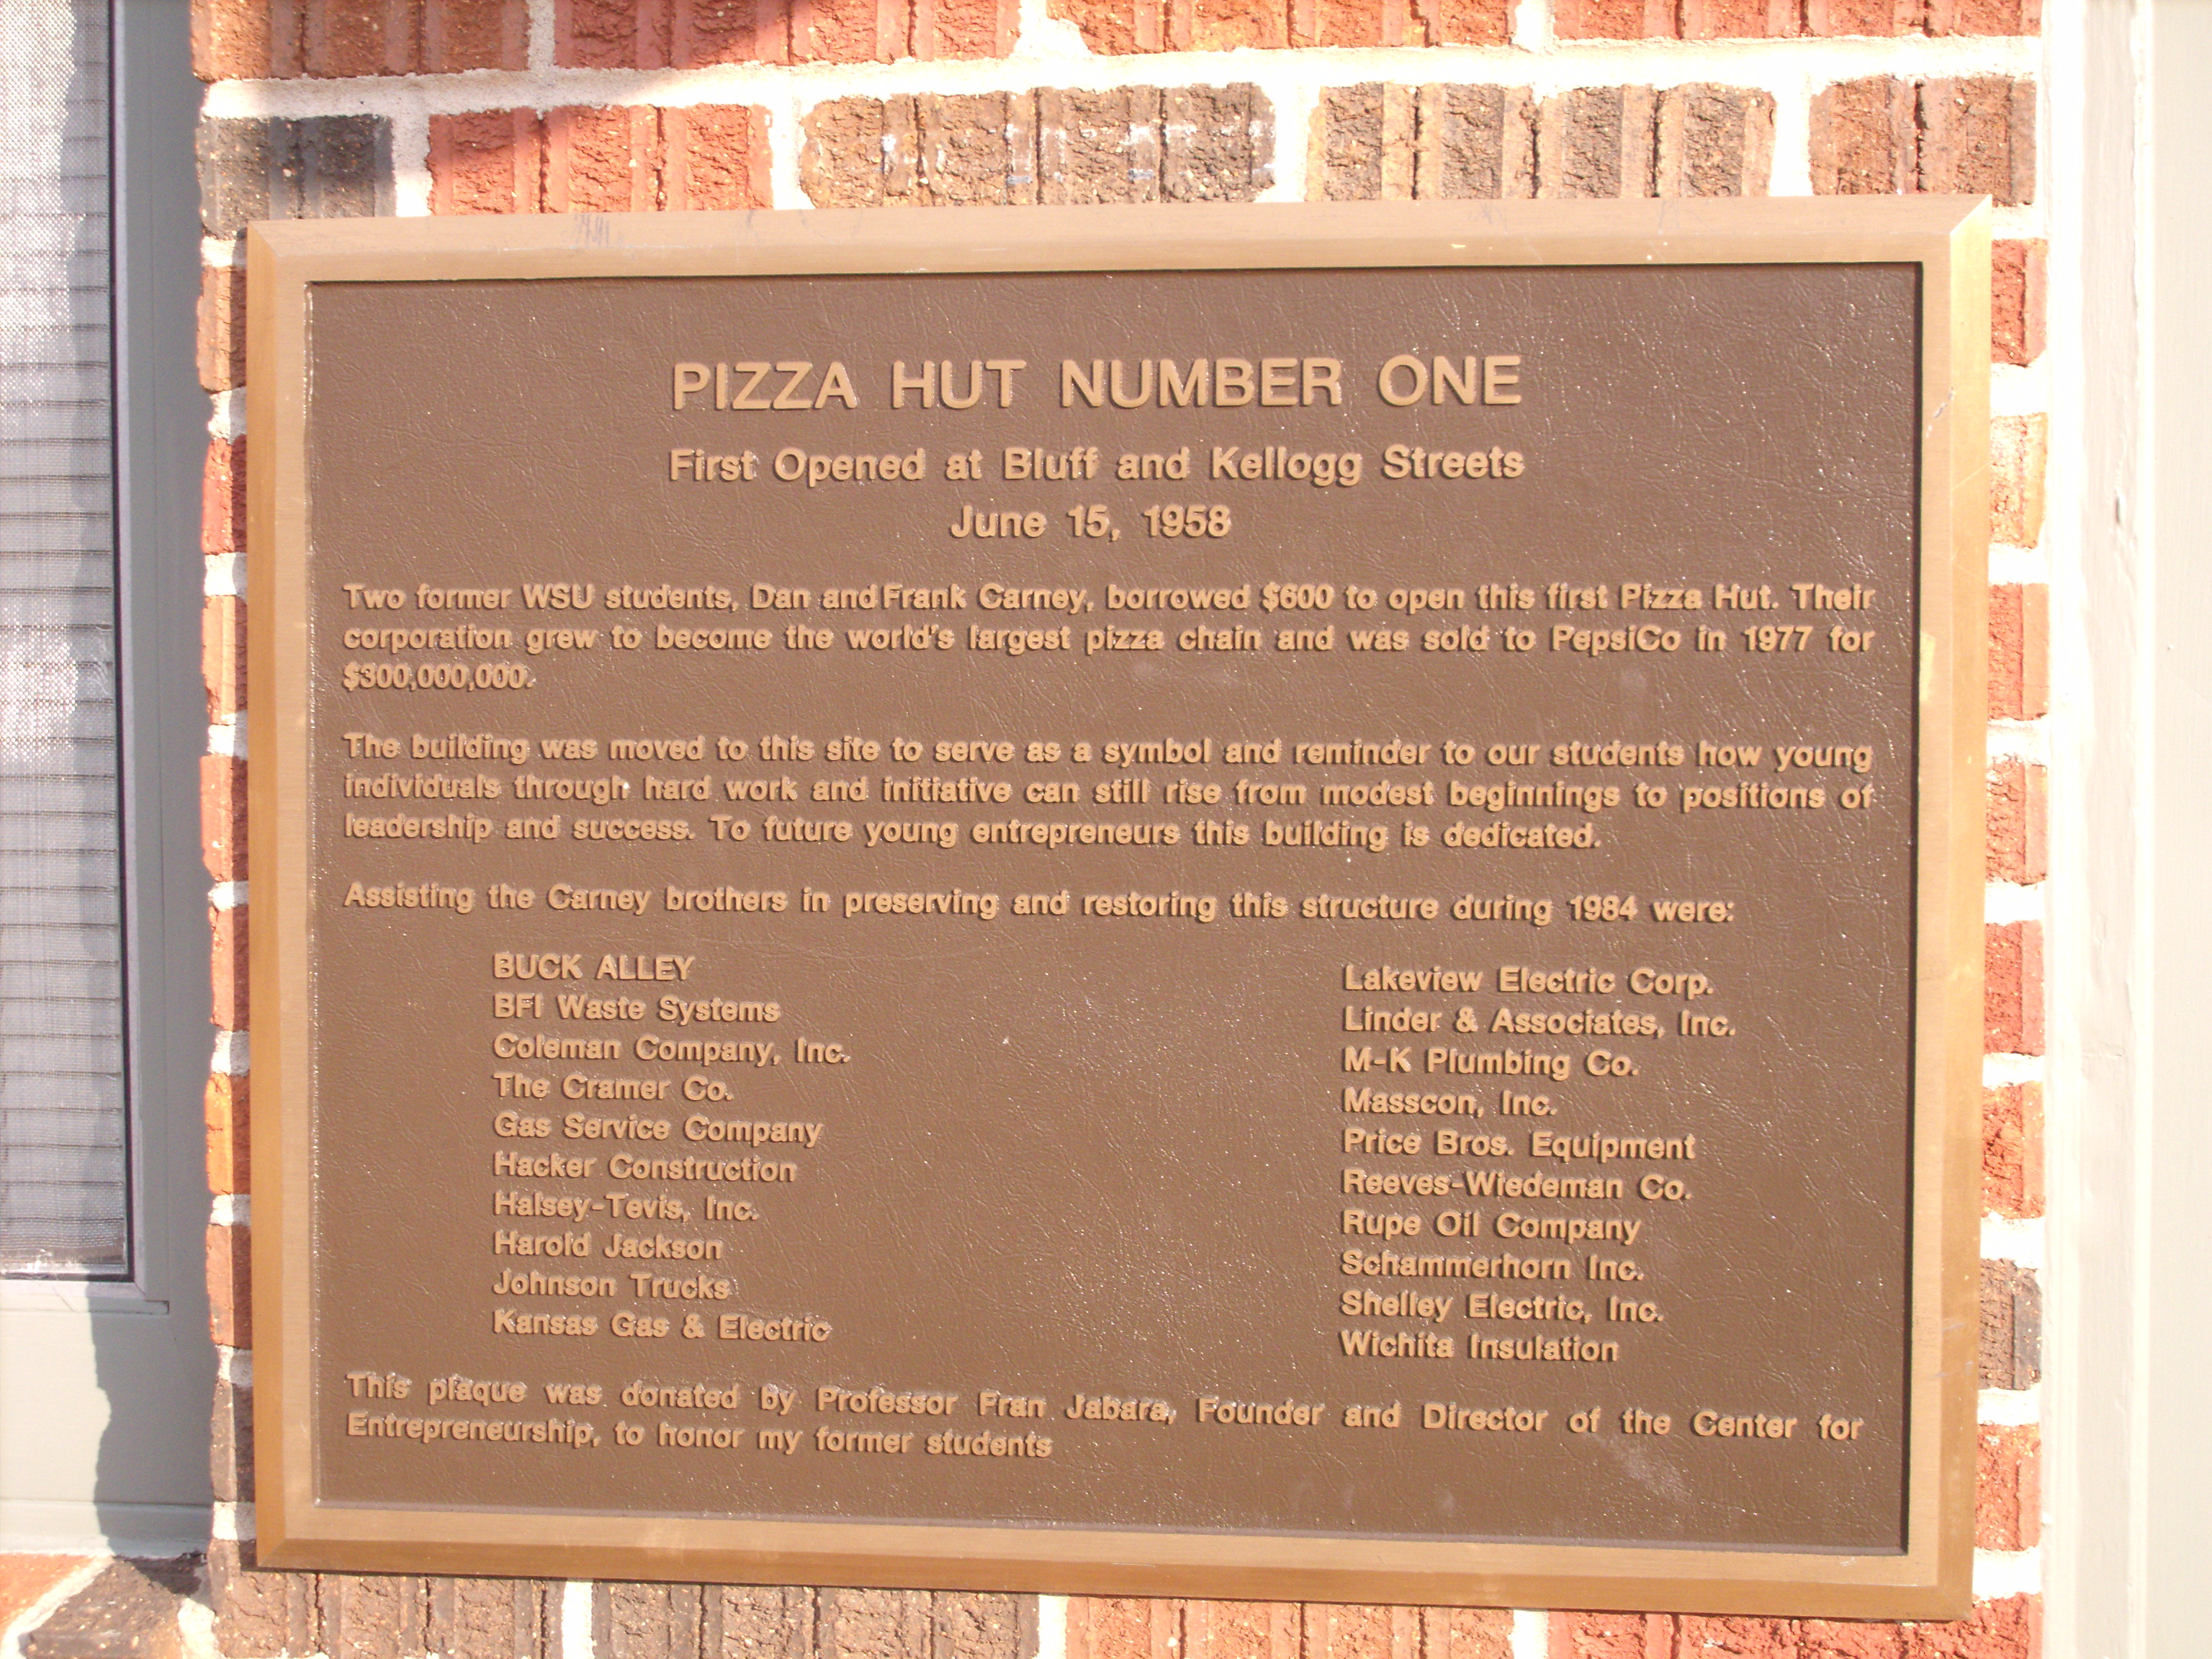 pizza hut history